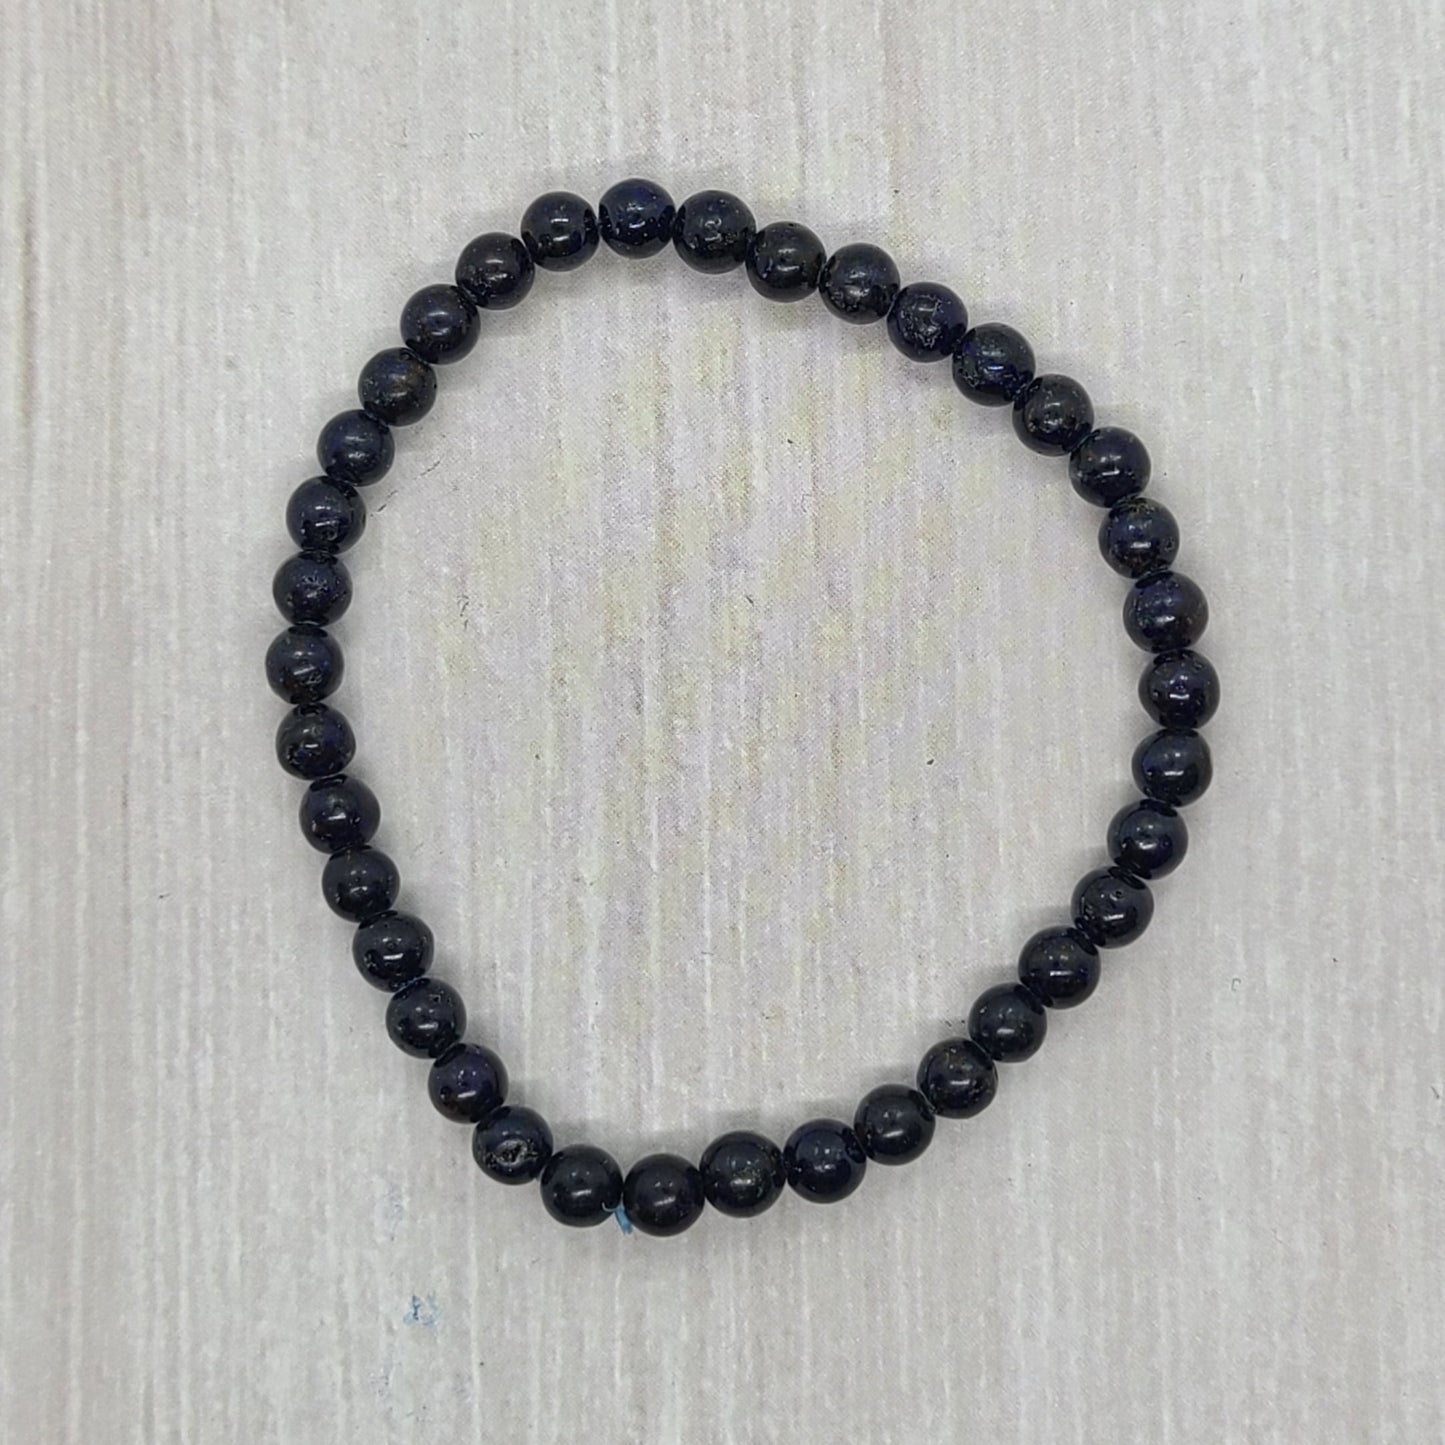 Azurite Malachite | Bracelet